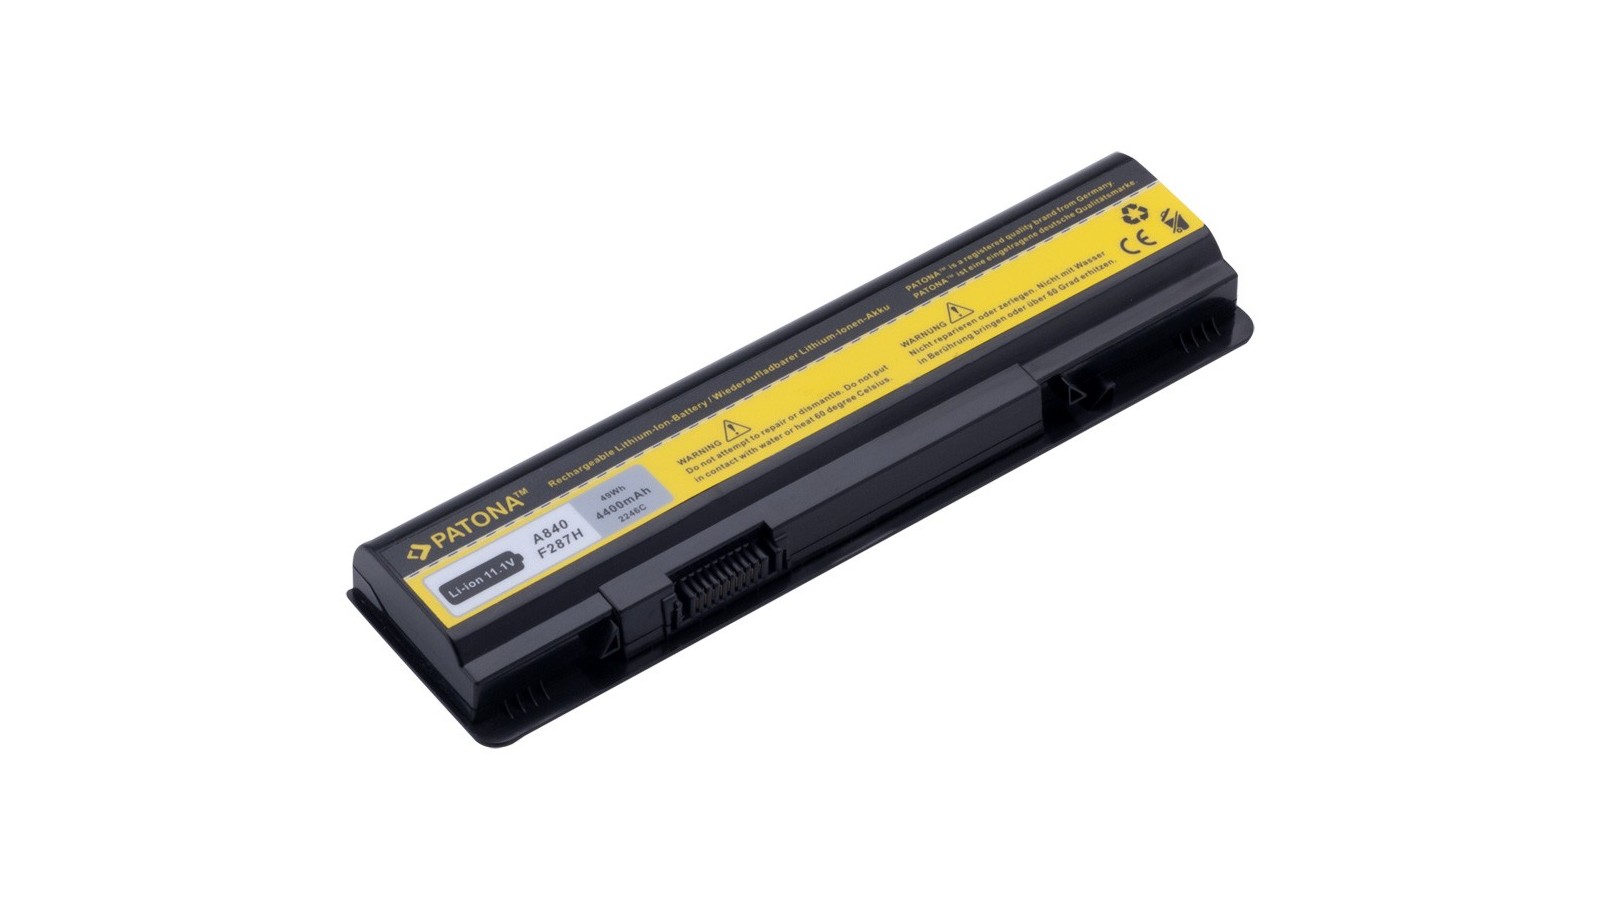 Batteria 4400 mAh compatibile con Dell Vostro 1014 1014N 1015 1015N 1088 1088N A840 A860 A860N